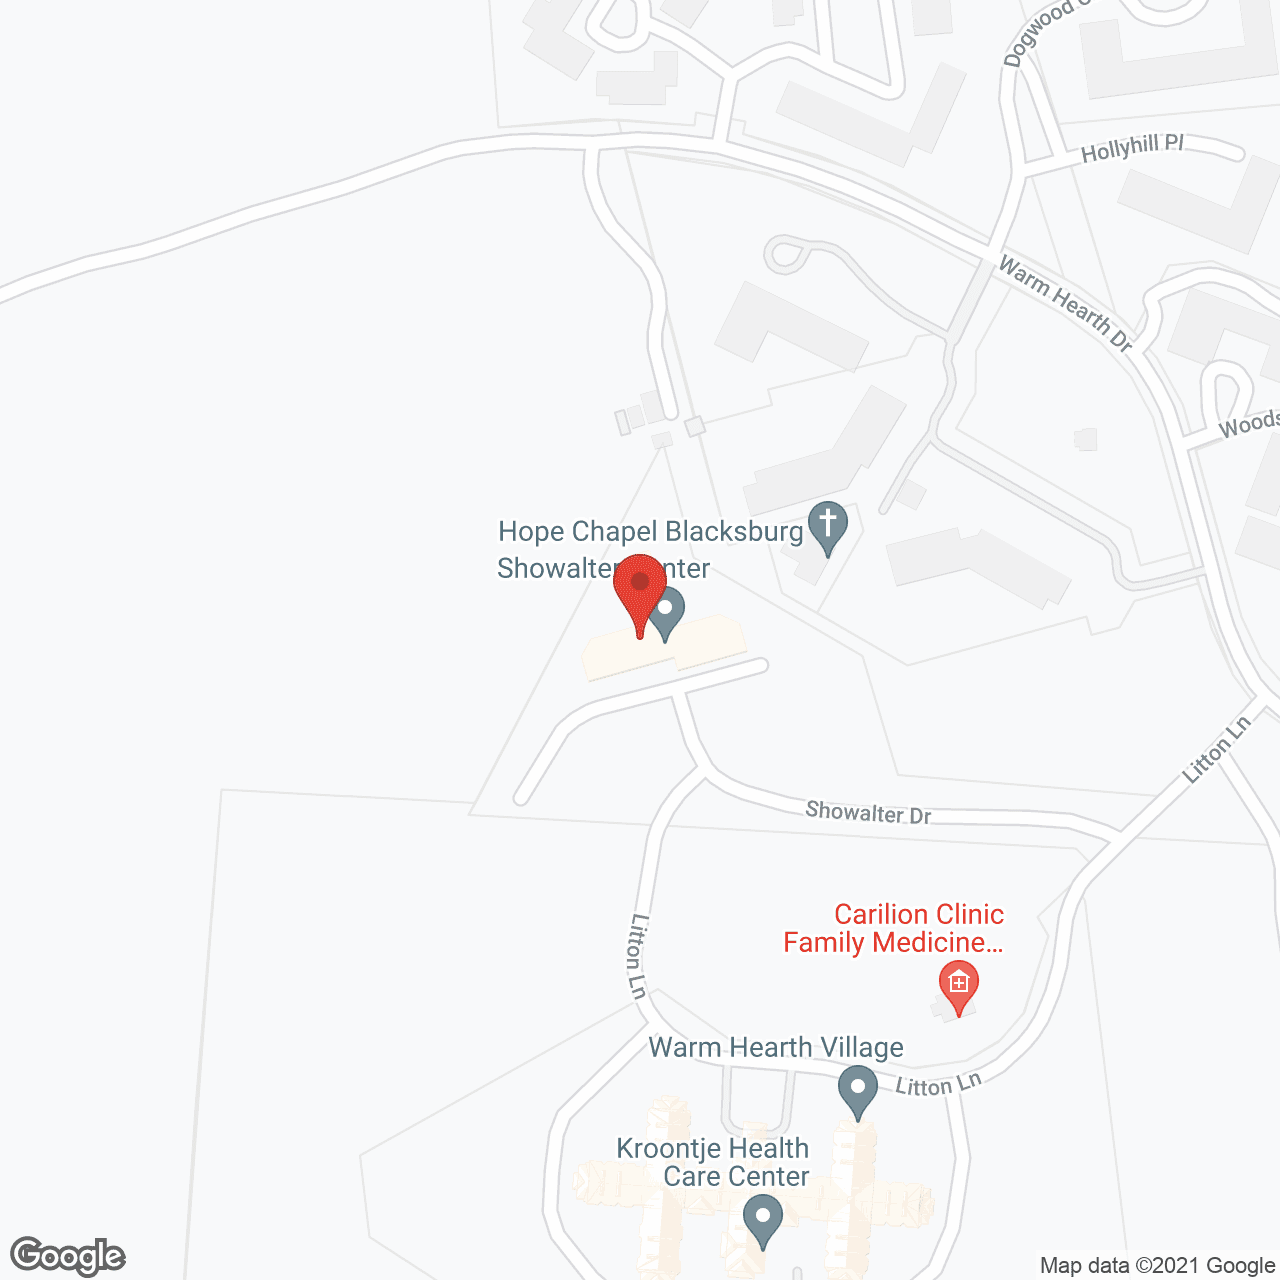 Showalter Center in google map